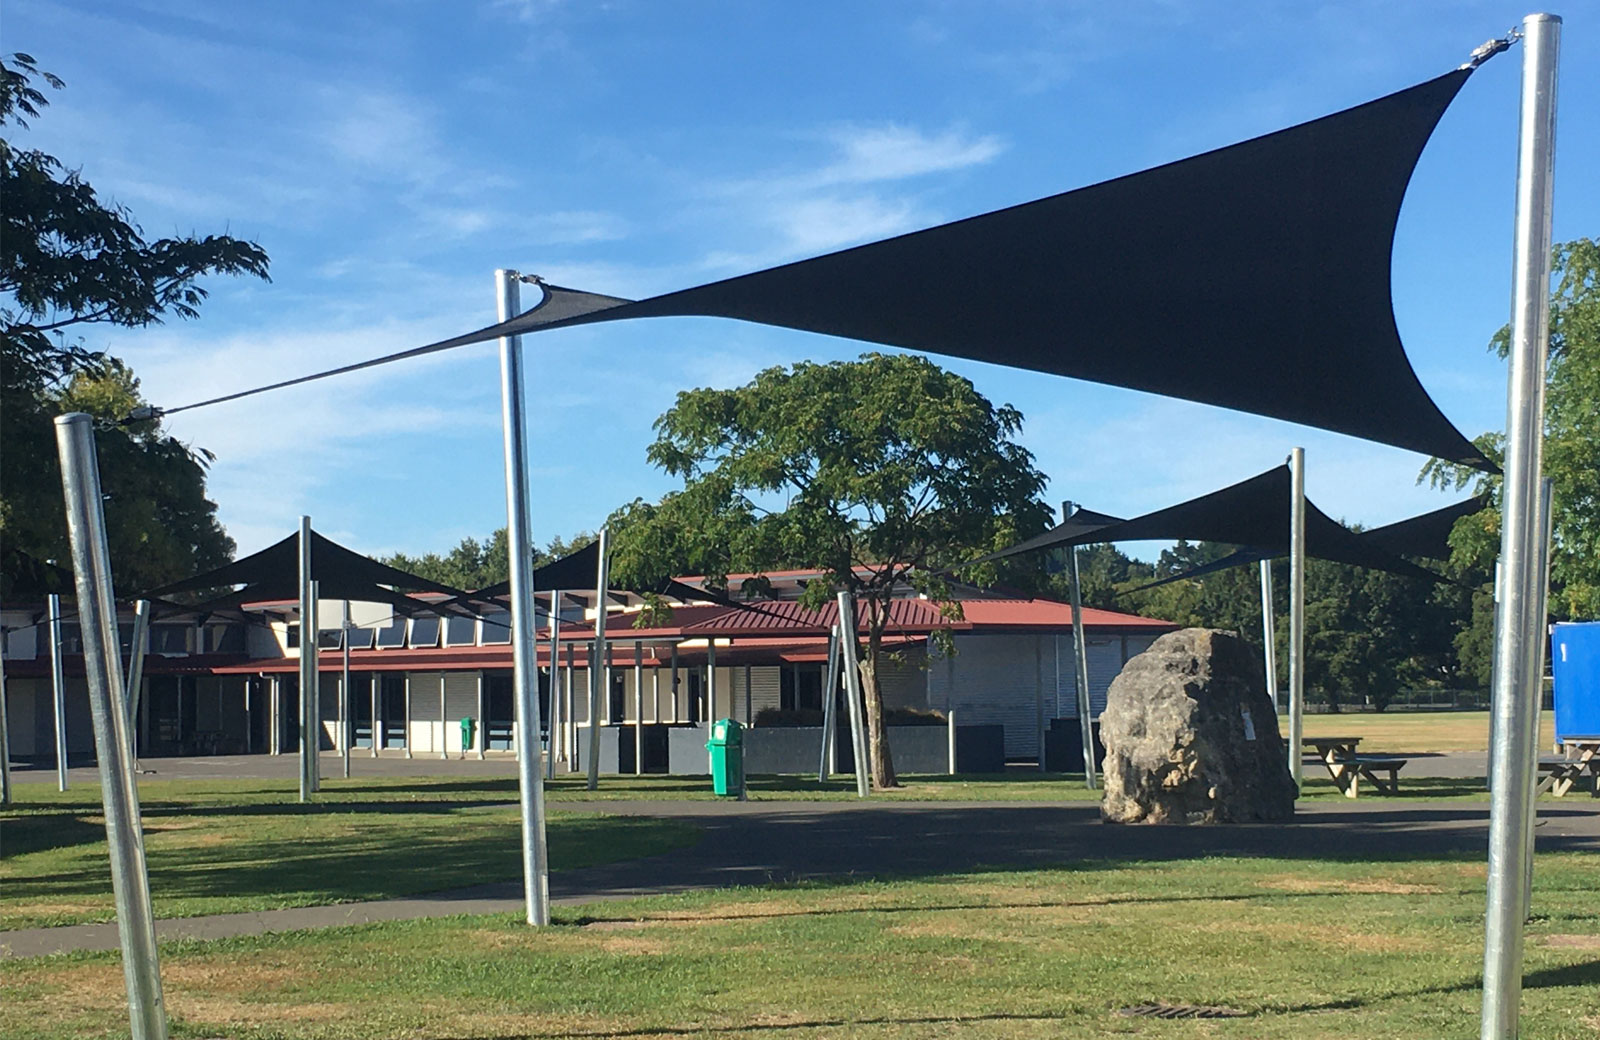 Shade sails solution by Sunshade Hawkes Bay provides shade and UV protection for students at Wairoa College